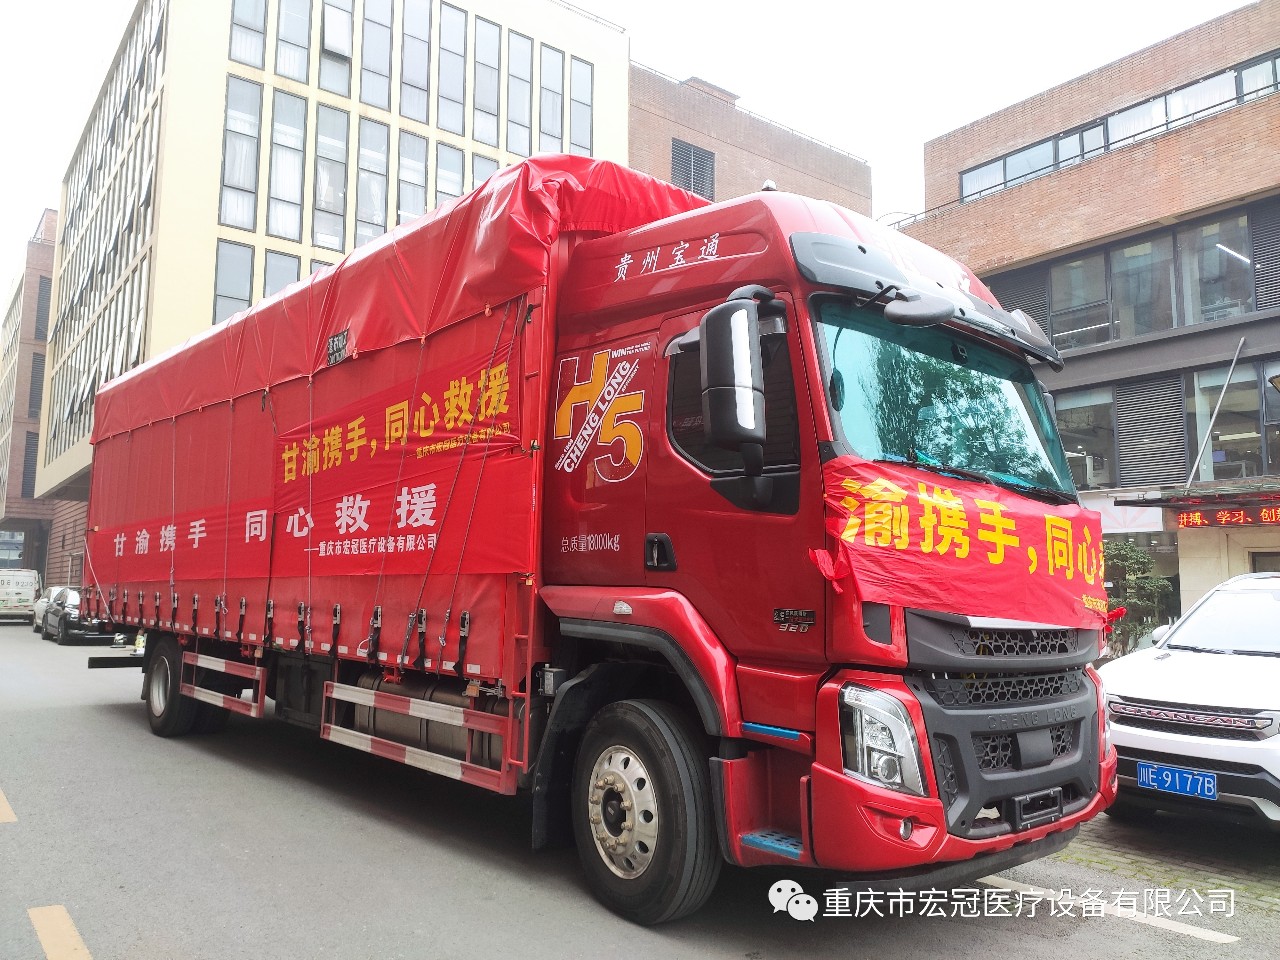 Chongqing Hongguan Medical Equipment Co., Ltd. গানসুতে দুর্যোগপূর্ণ এলাকায় সহায়তার জন্য 700,000 ইউয়ানেরও বেশি চিকিৎসা সামগ্রী দান করেছে।